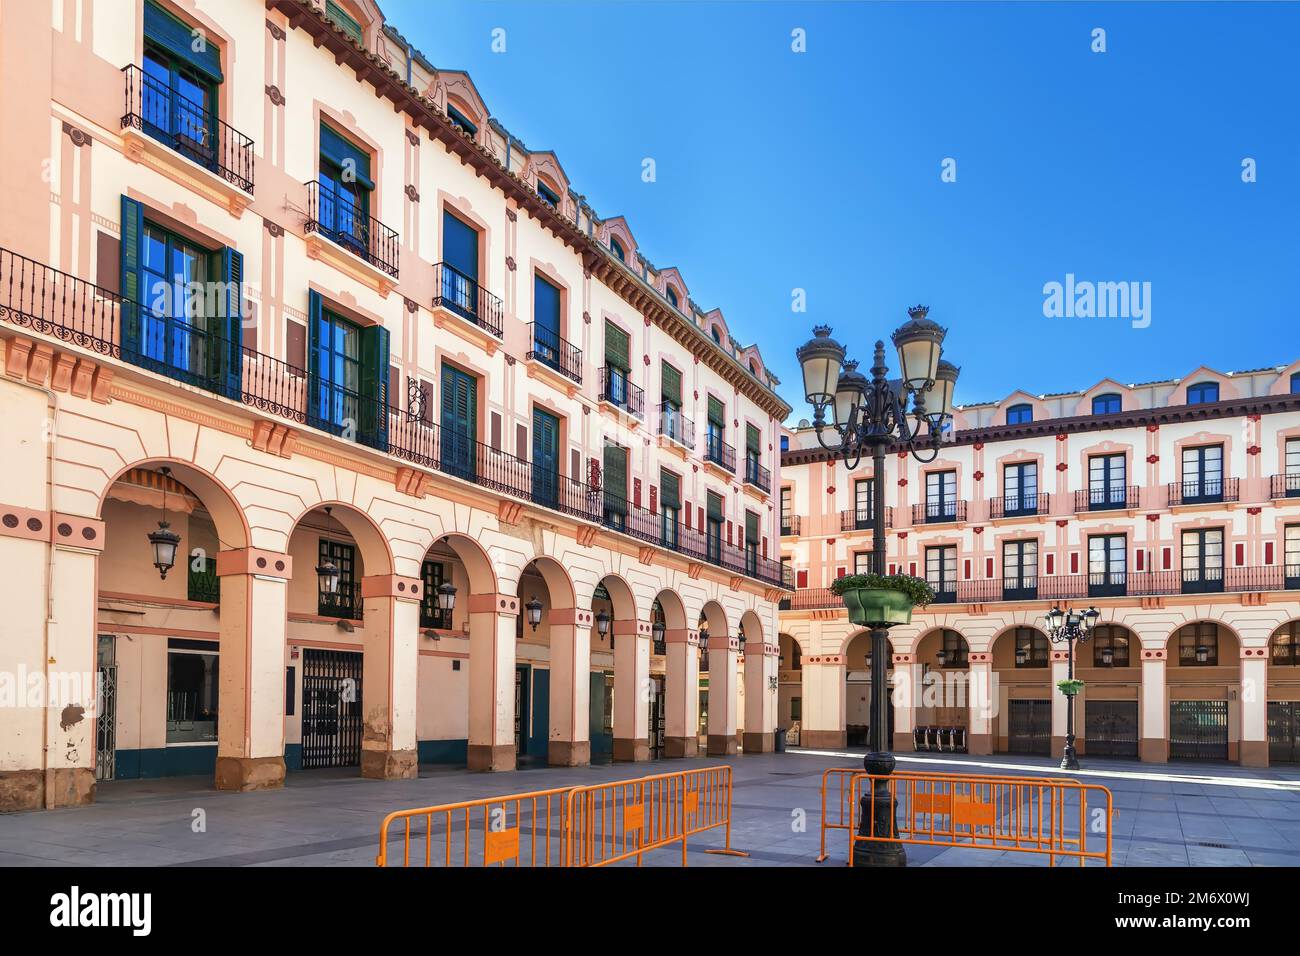 Luis Lopez Allue Square, Huesca, Spain Stock Photo